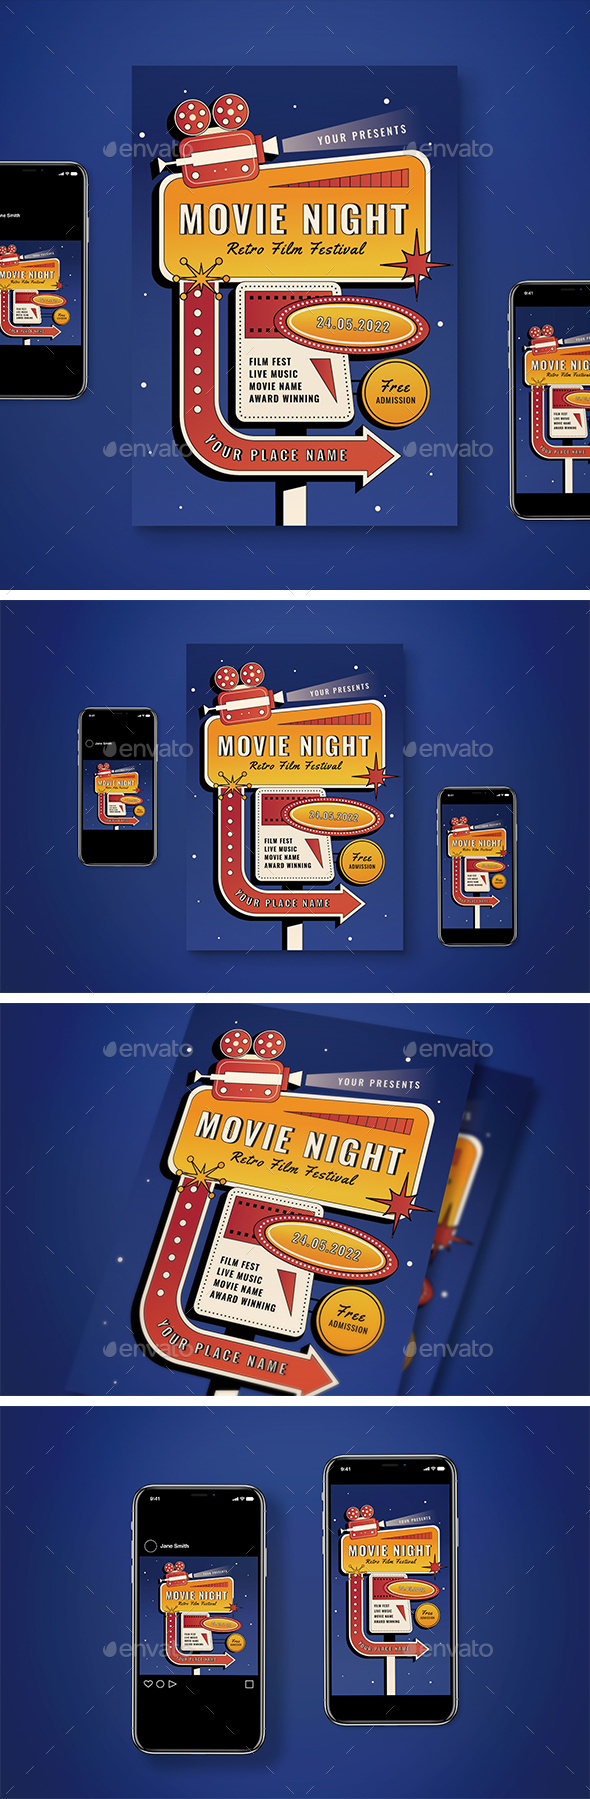 [DOWNLOAD]Movie Night Flyer Pack